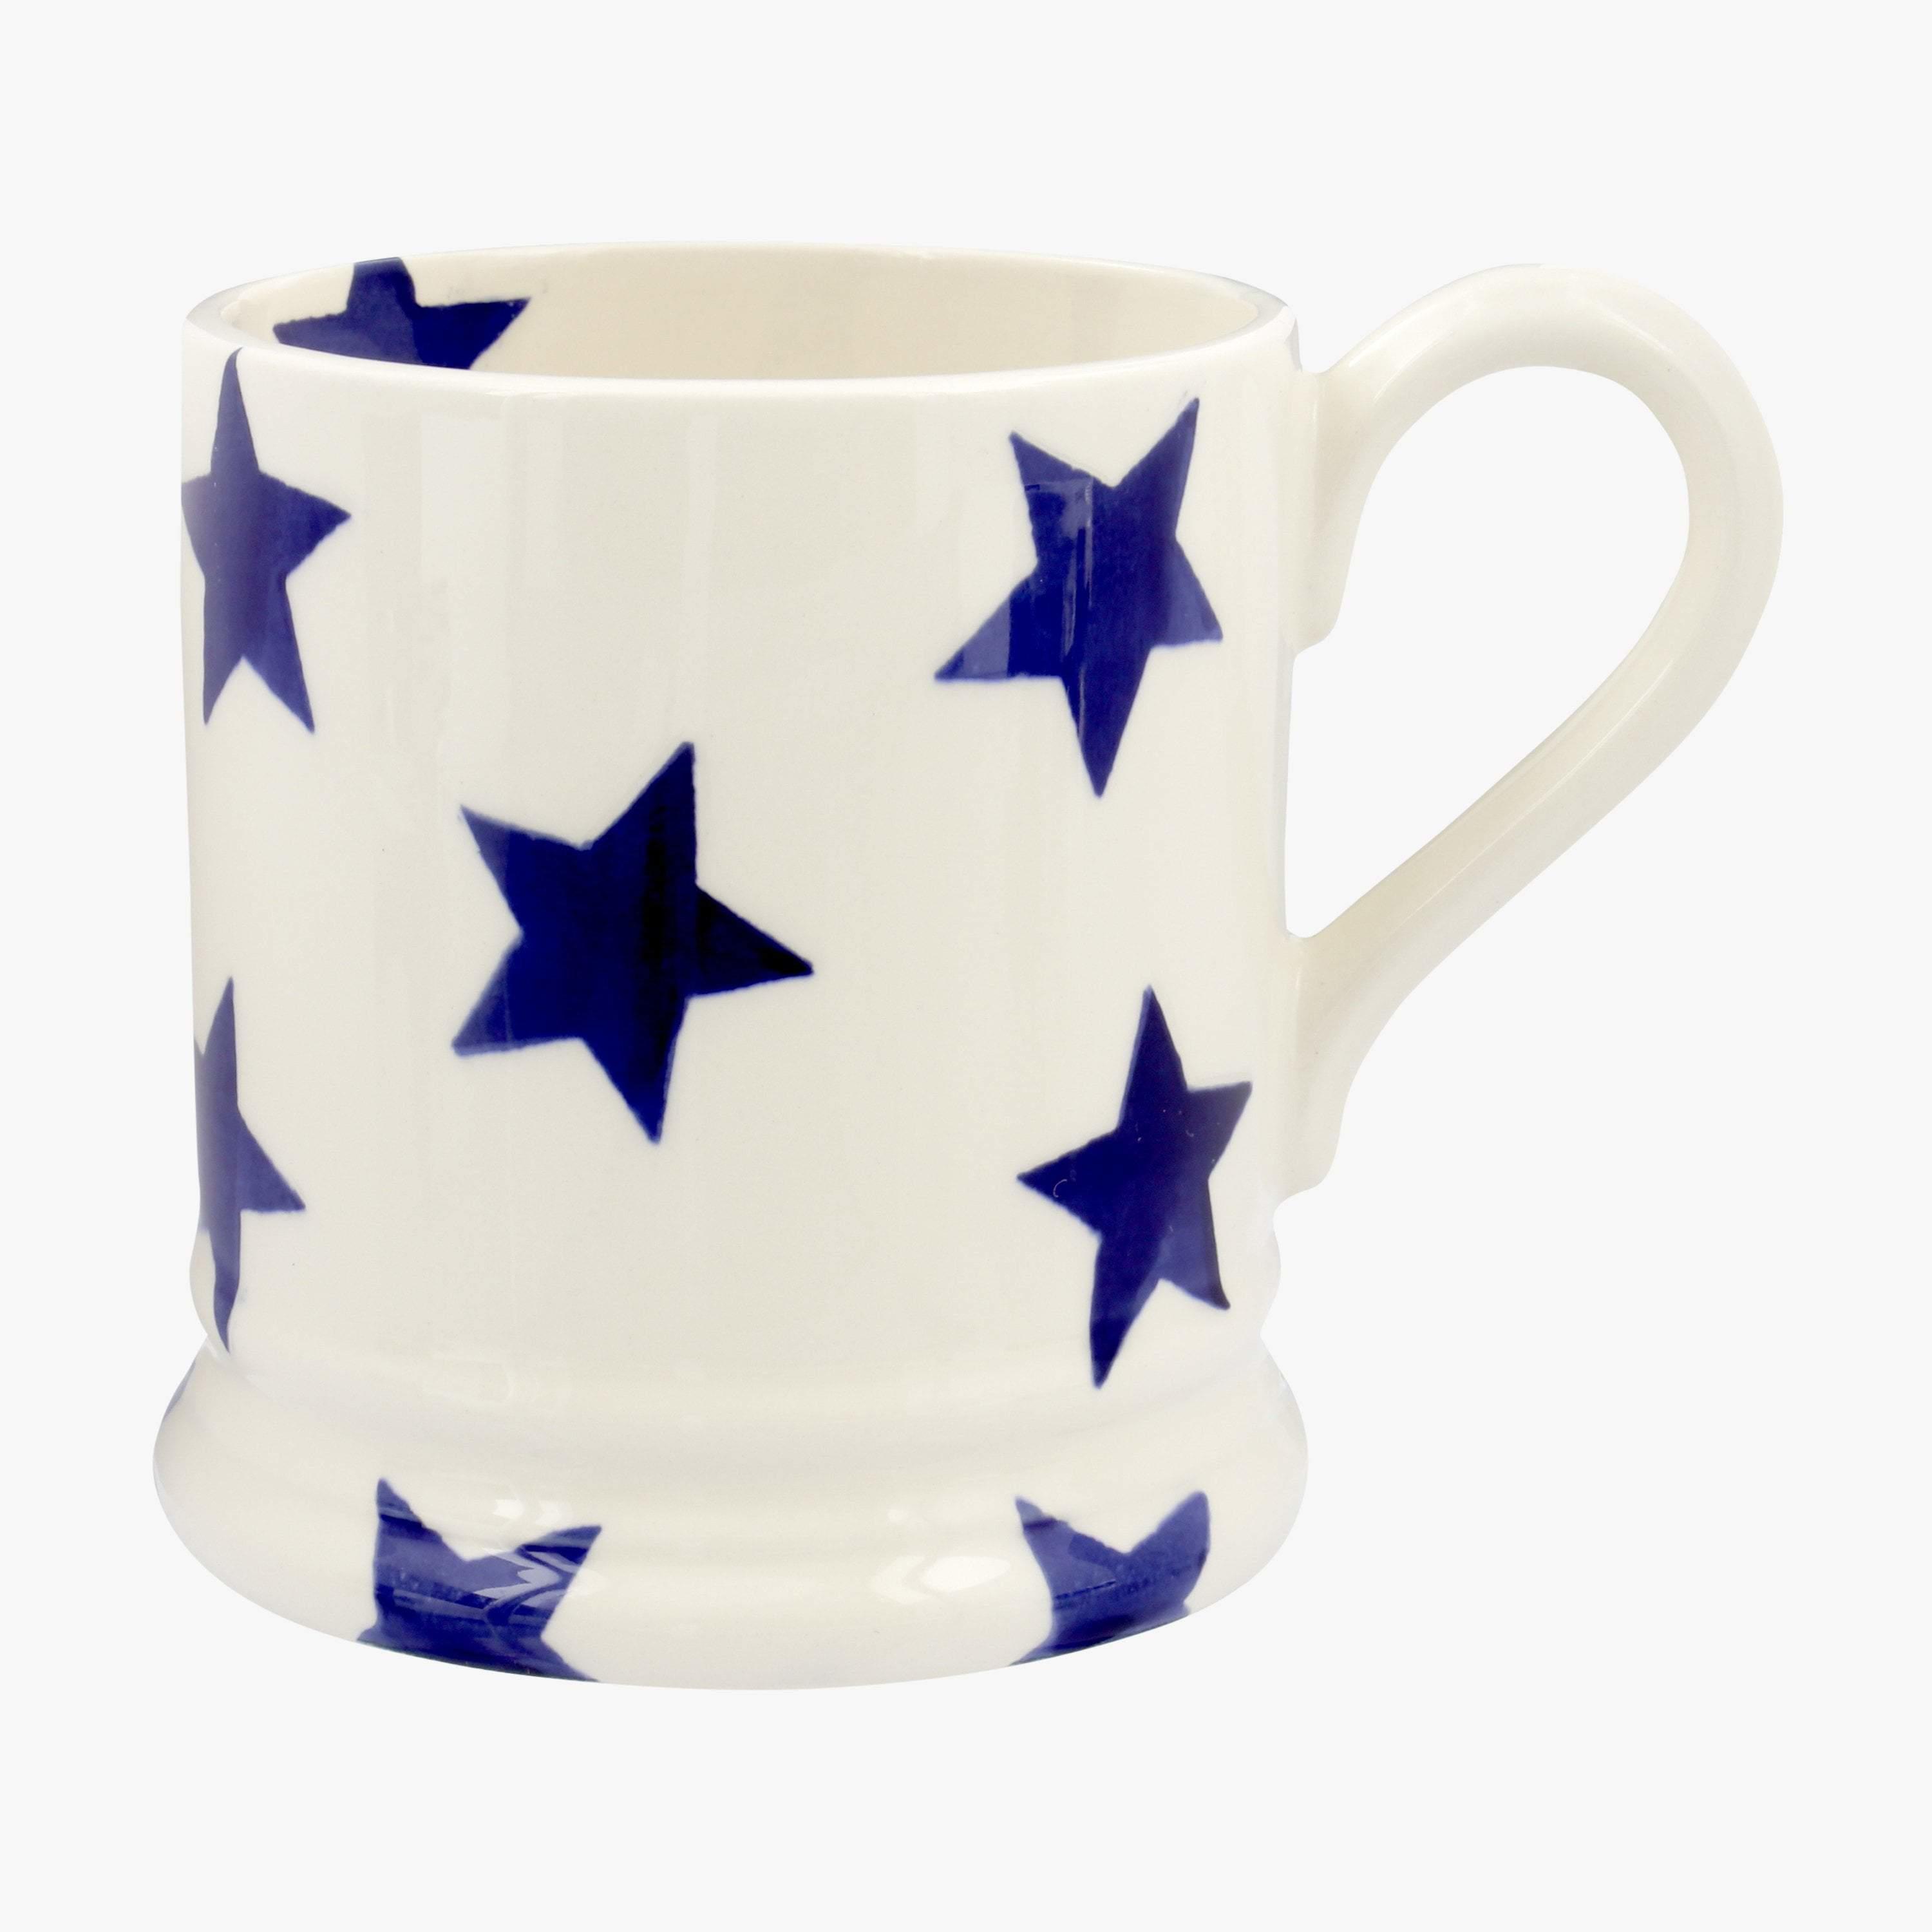 Emma Bridgewater  Seconds Blue Star 1/2 Pint Mug - Unique Handmade & Handpainted English Earthenware Tea/Coffee Mug